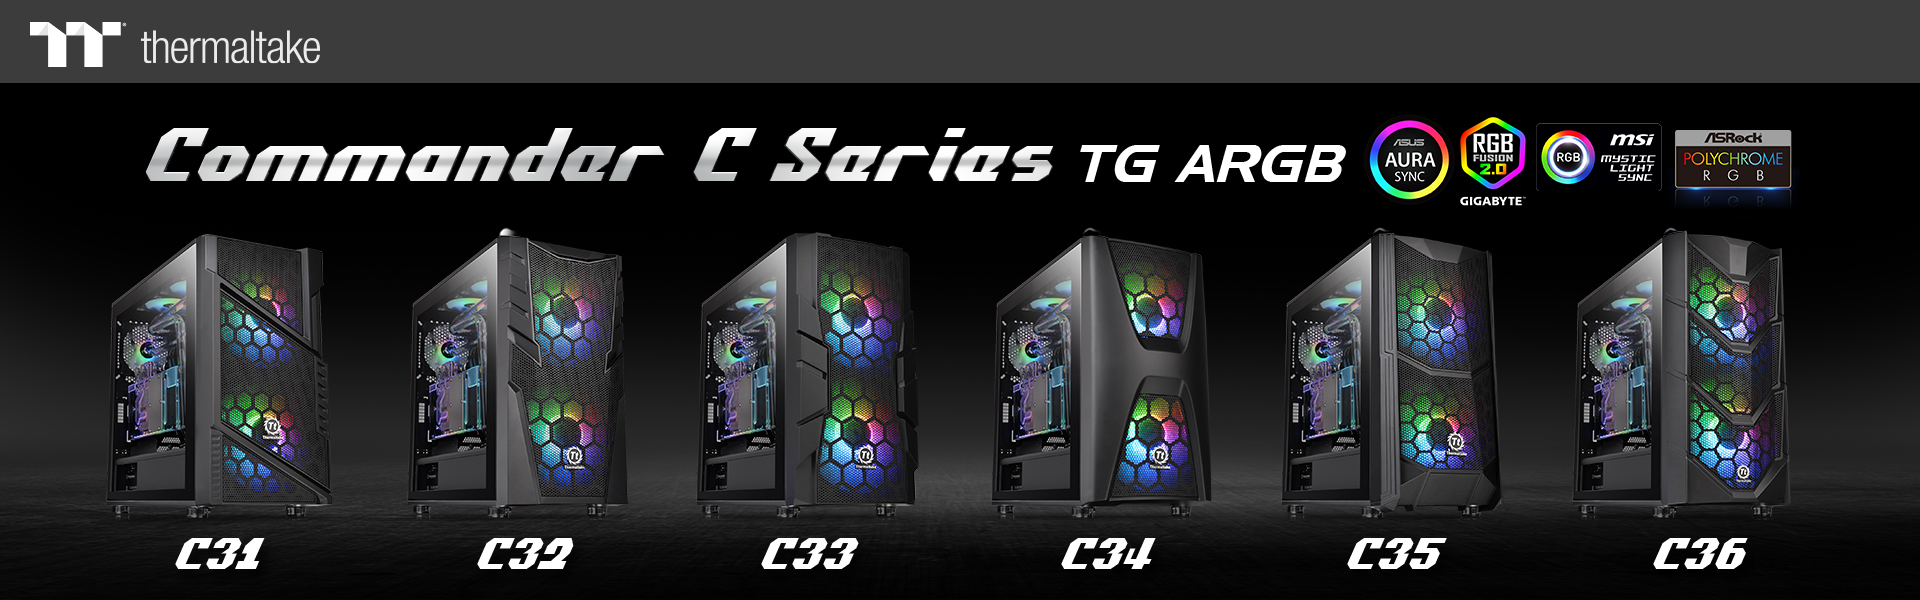 thermaltake new commander c series  2 Thermaltake เปิดตัวเคสรุ่นใหม่ล่าสุด Commander C Series TG ARGB มากถึง 6รุ่น พร้อมกระจกนิรภัย Tempered Glass และพัดลม Dual 200mm ARGB Fans แบบจัดเต็ม 